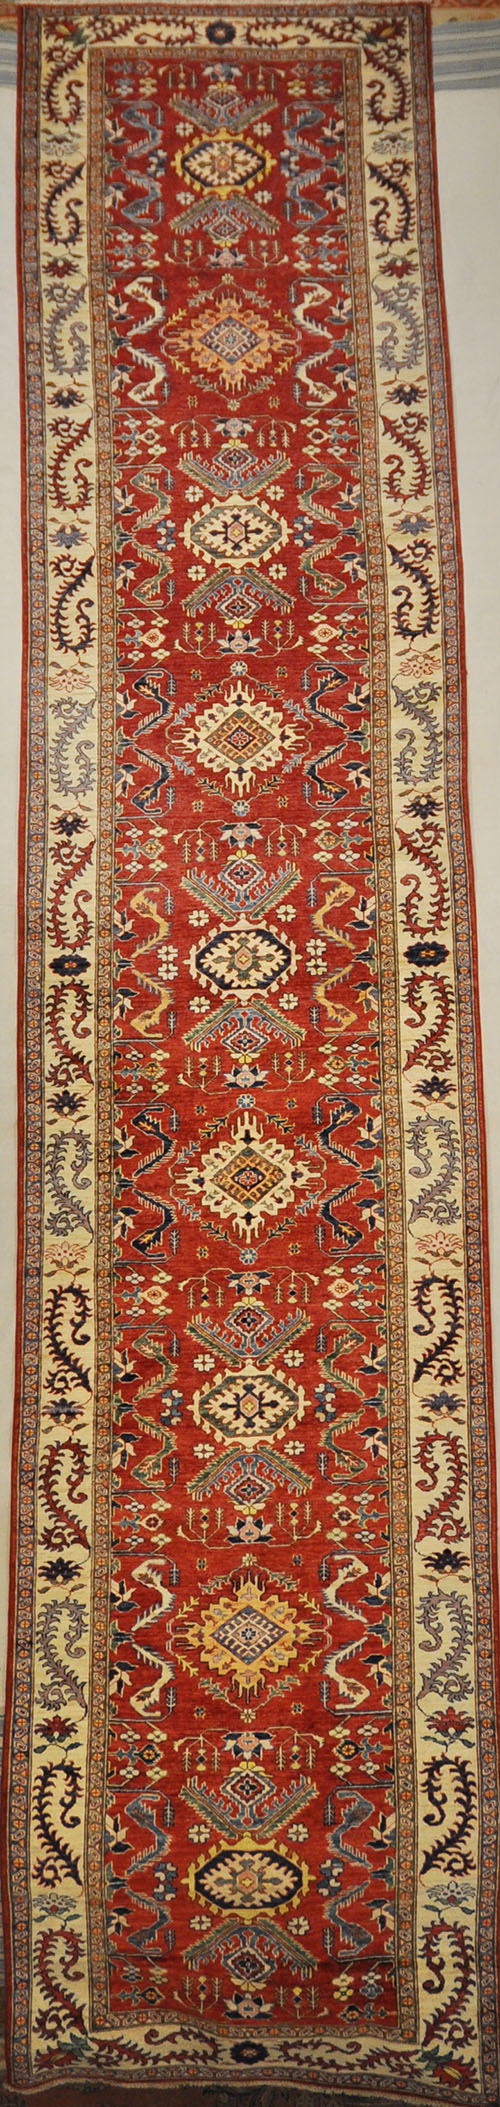 Turkoman Caucasian Rug santa barbara design center rugs and more oriental carpet 31004-